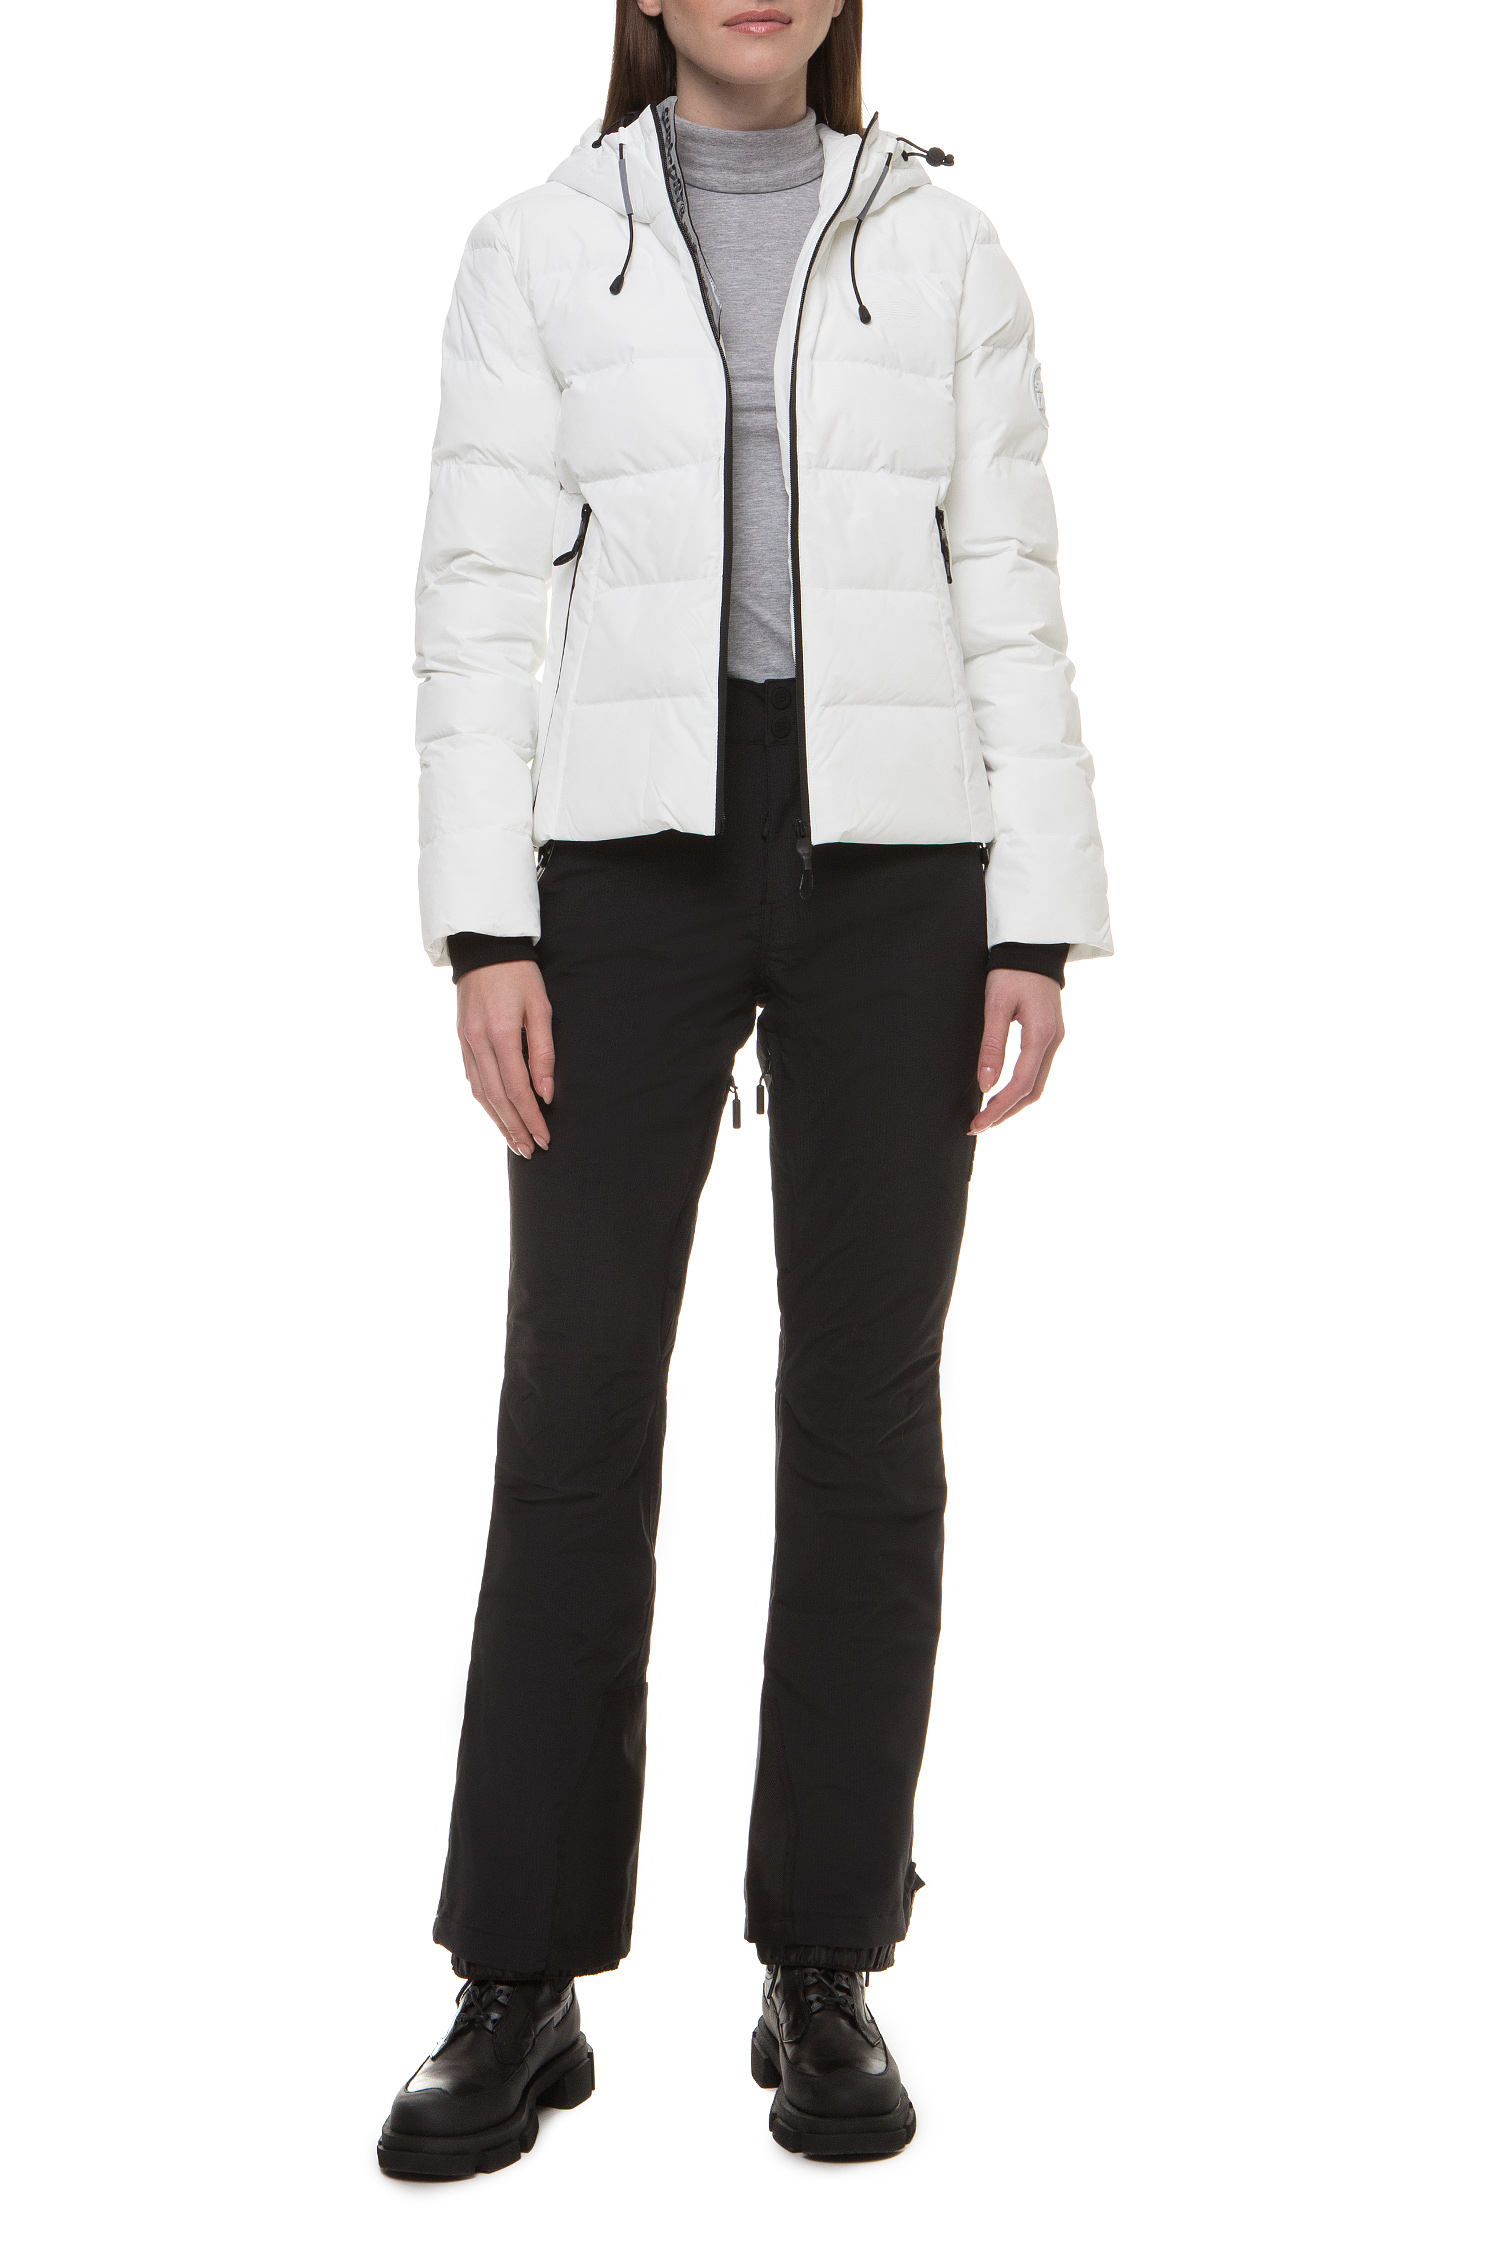 Жіночі чорні лижні штани Luxe Snow SuperDry GS1300SU;UHL